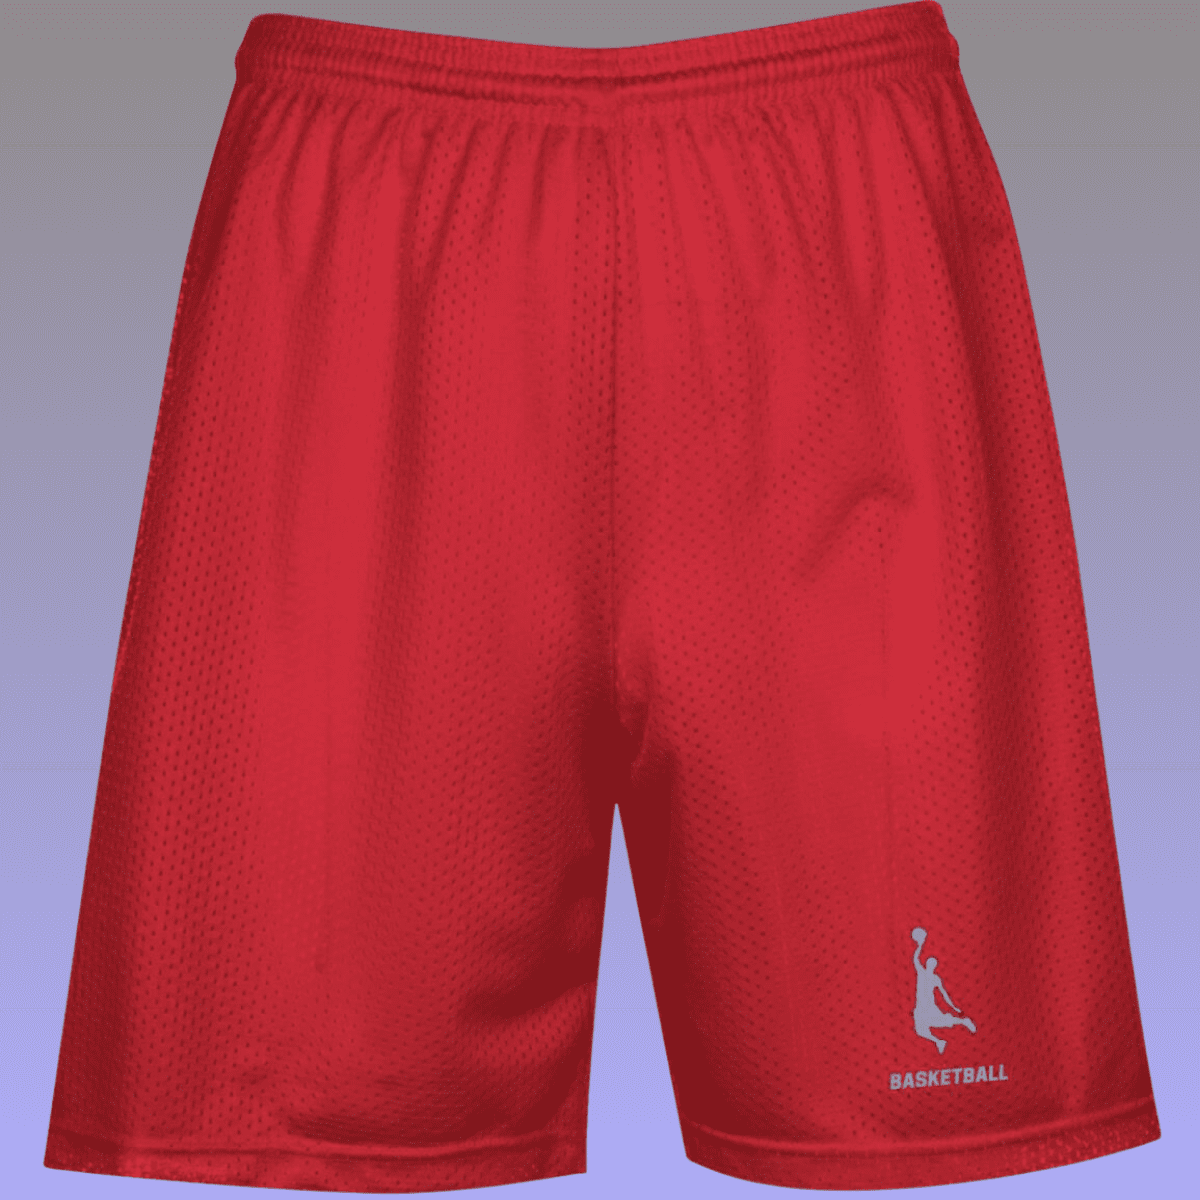 Men's Red Basketball Performance Mesh Shorts